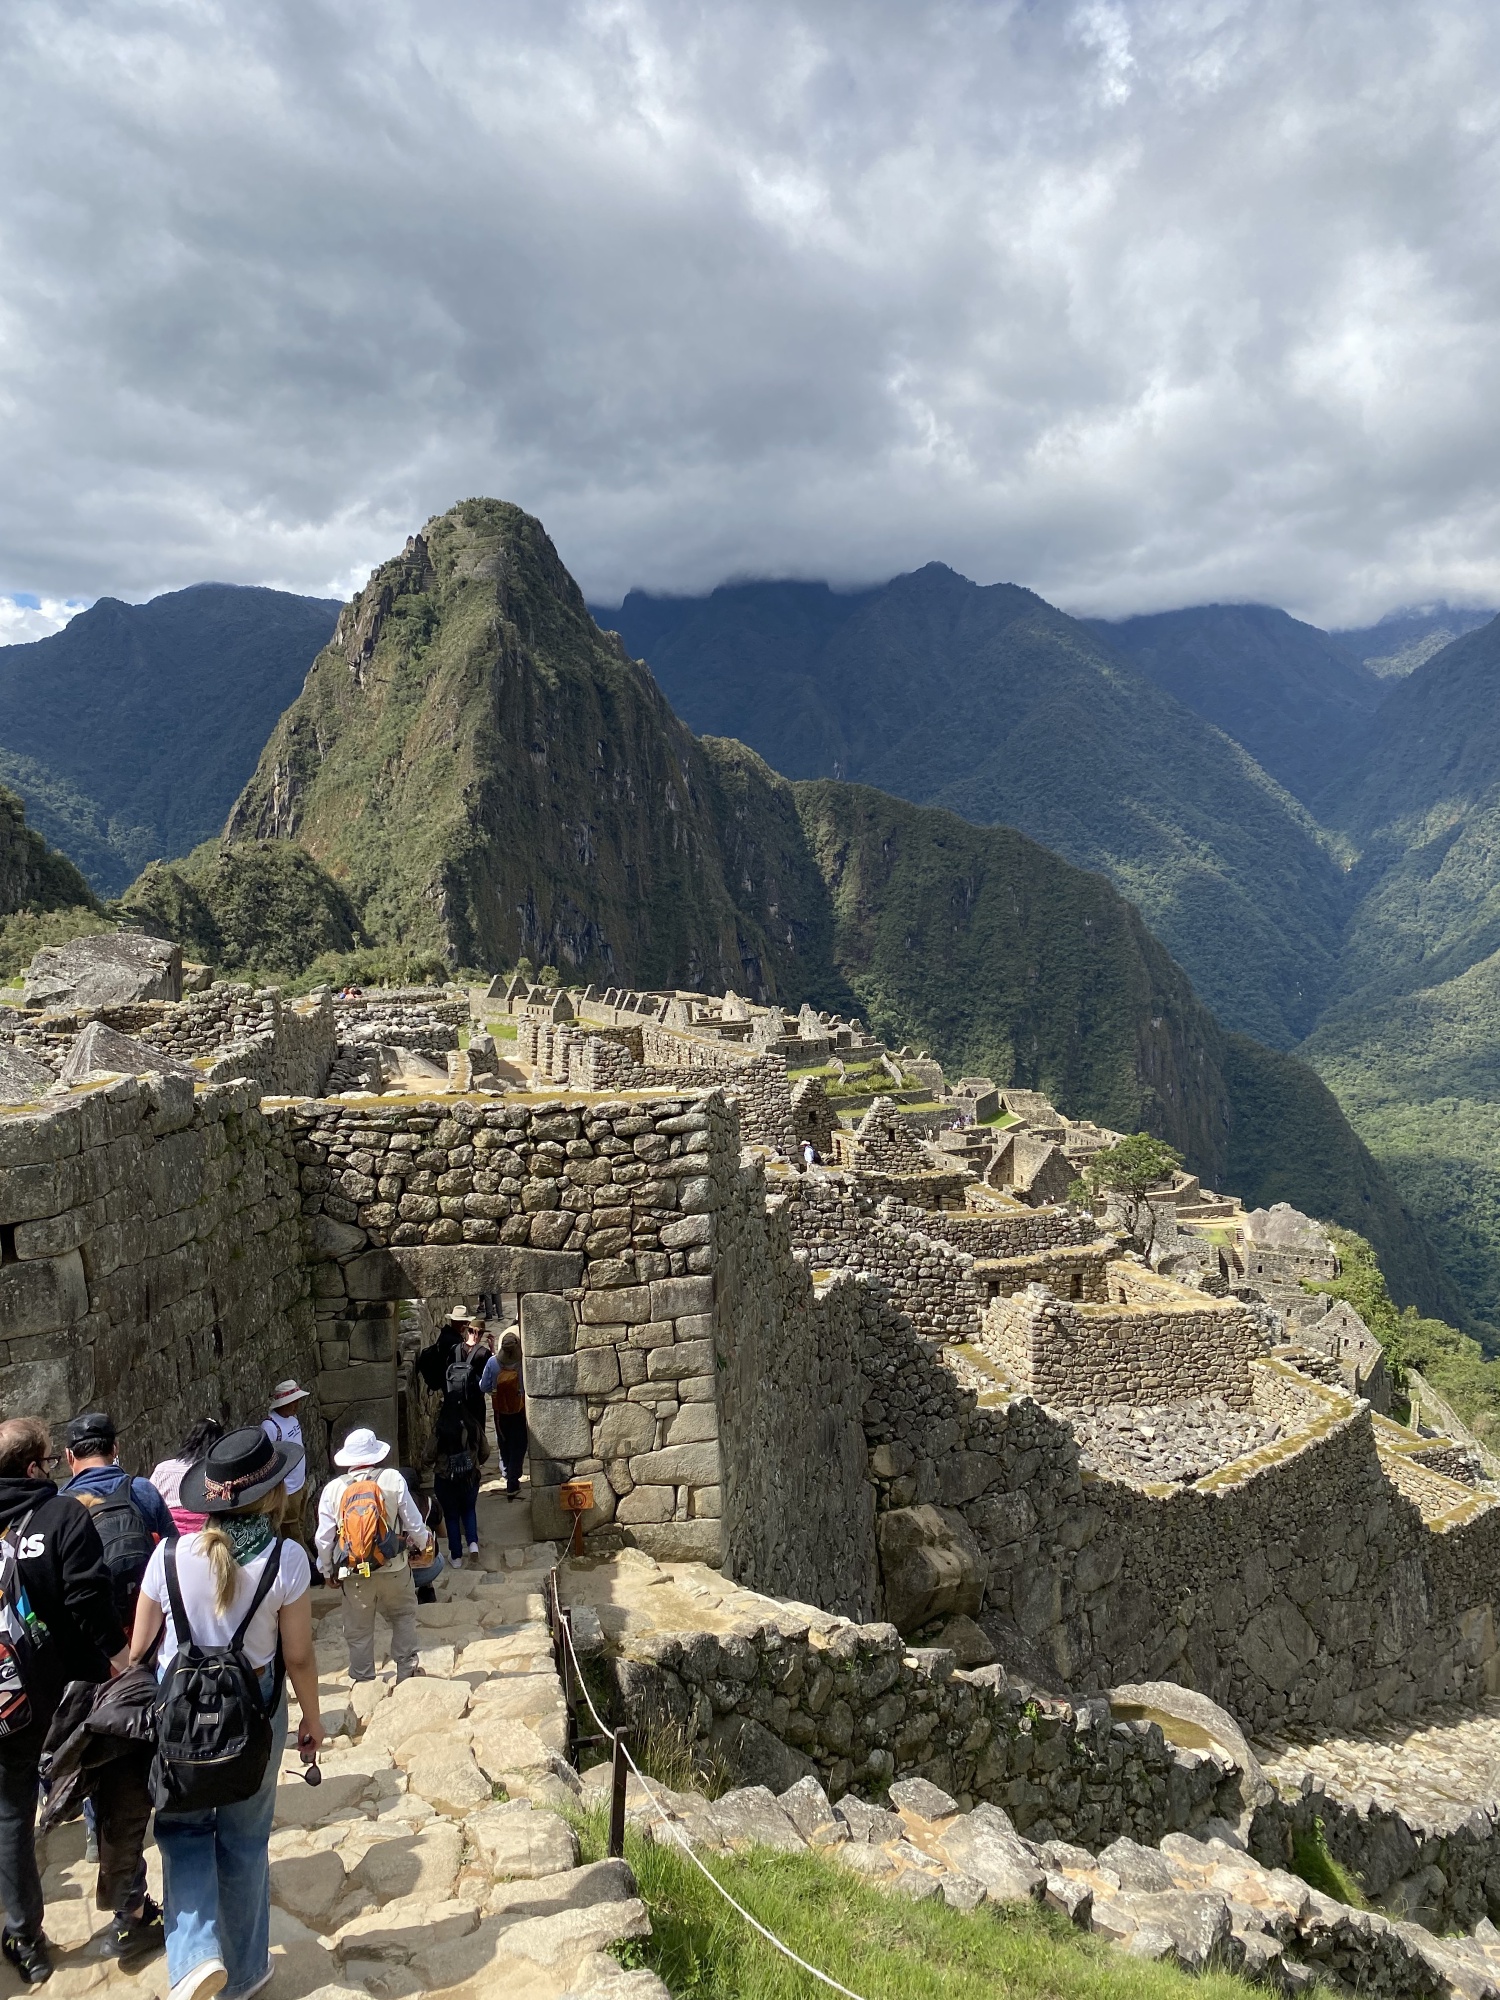 The entrance door to Machu Picchu